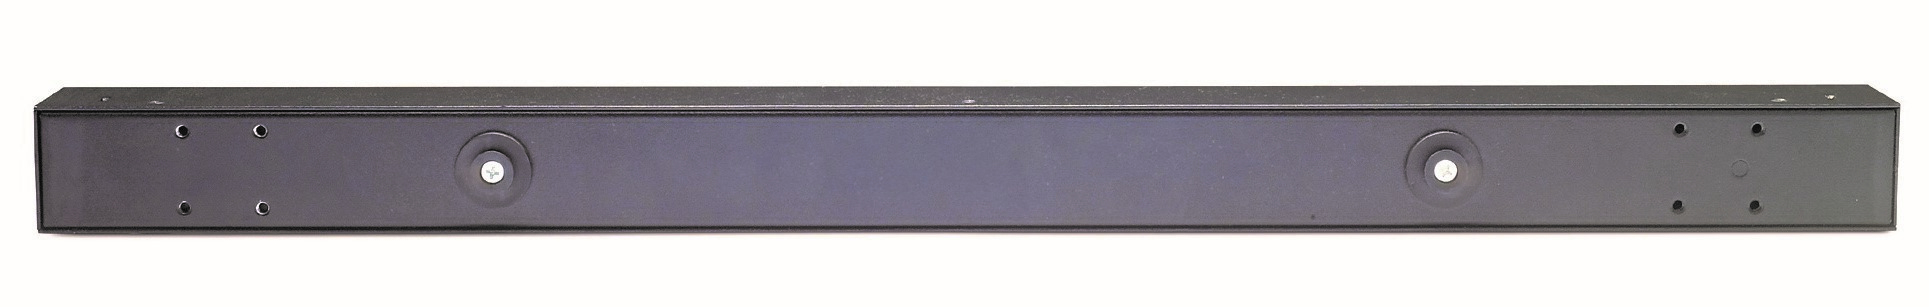 APC Basic Rack PDU Zero U - Steckdosenleiste (Rack - einbaufähig)